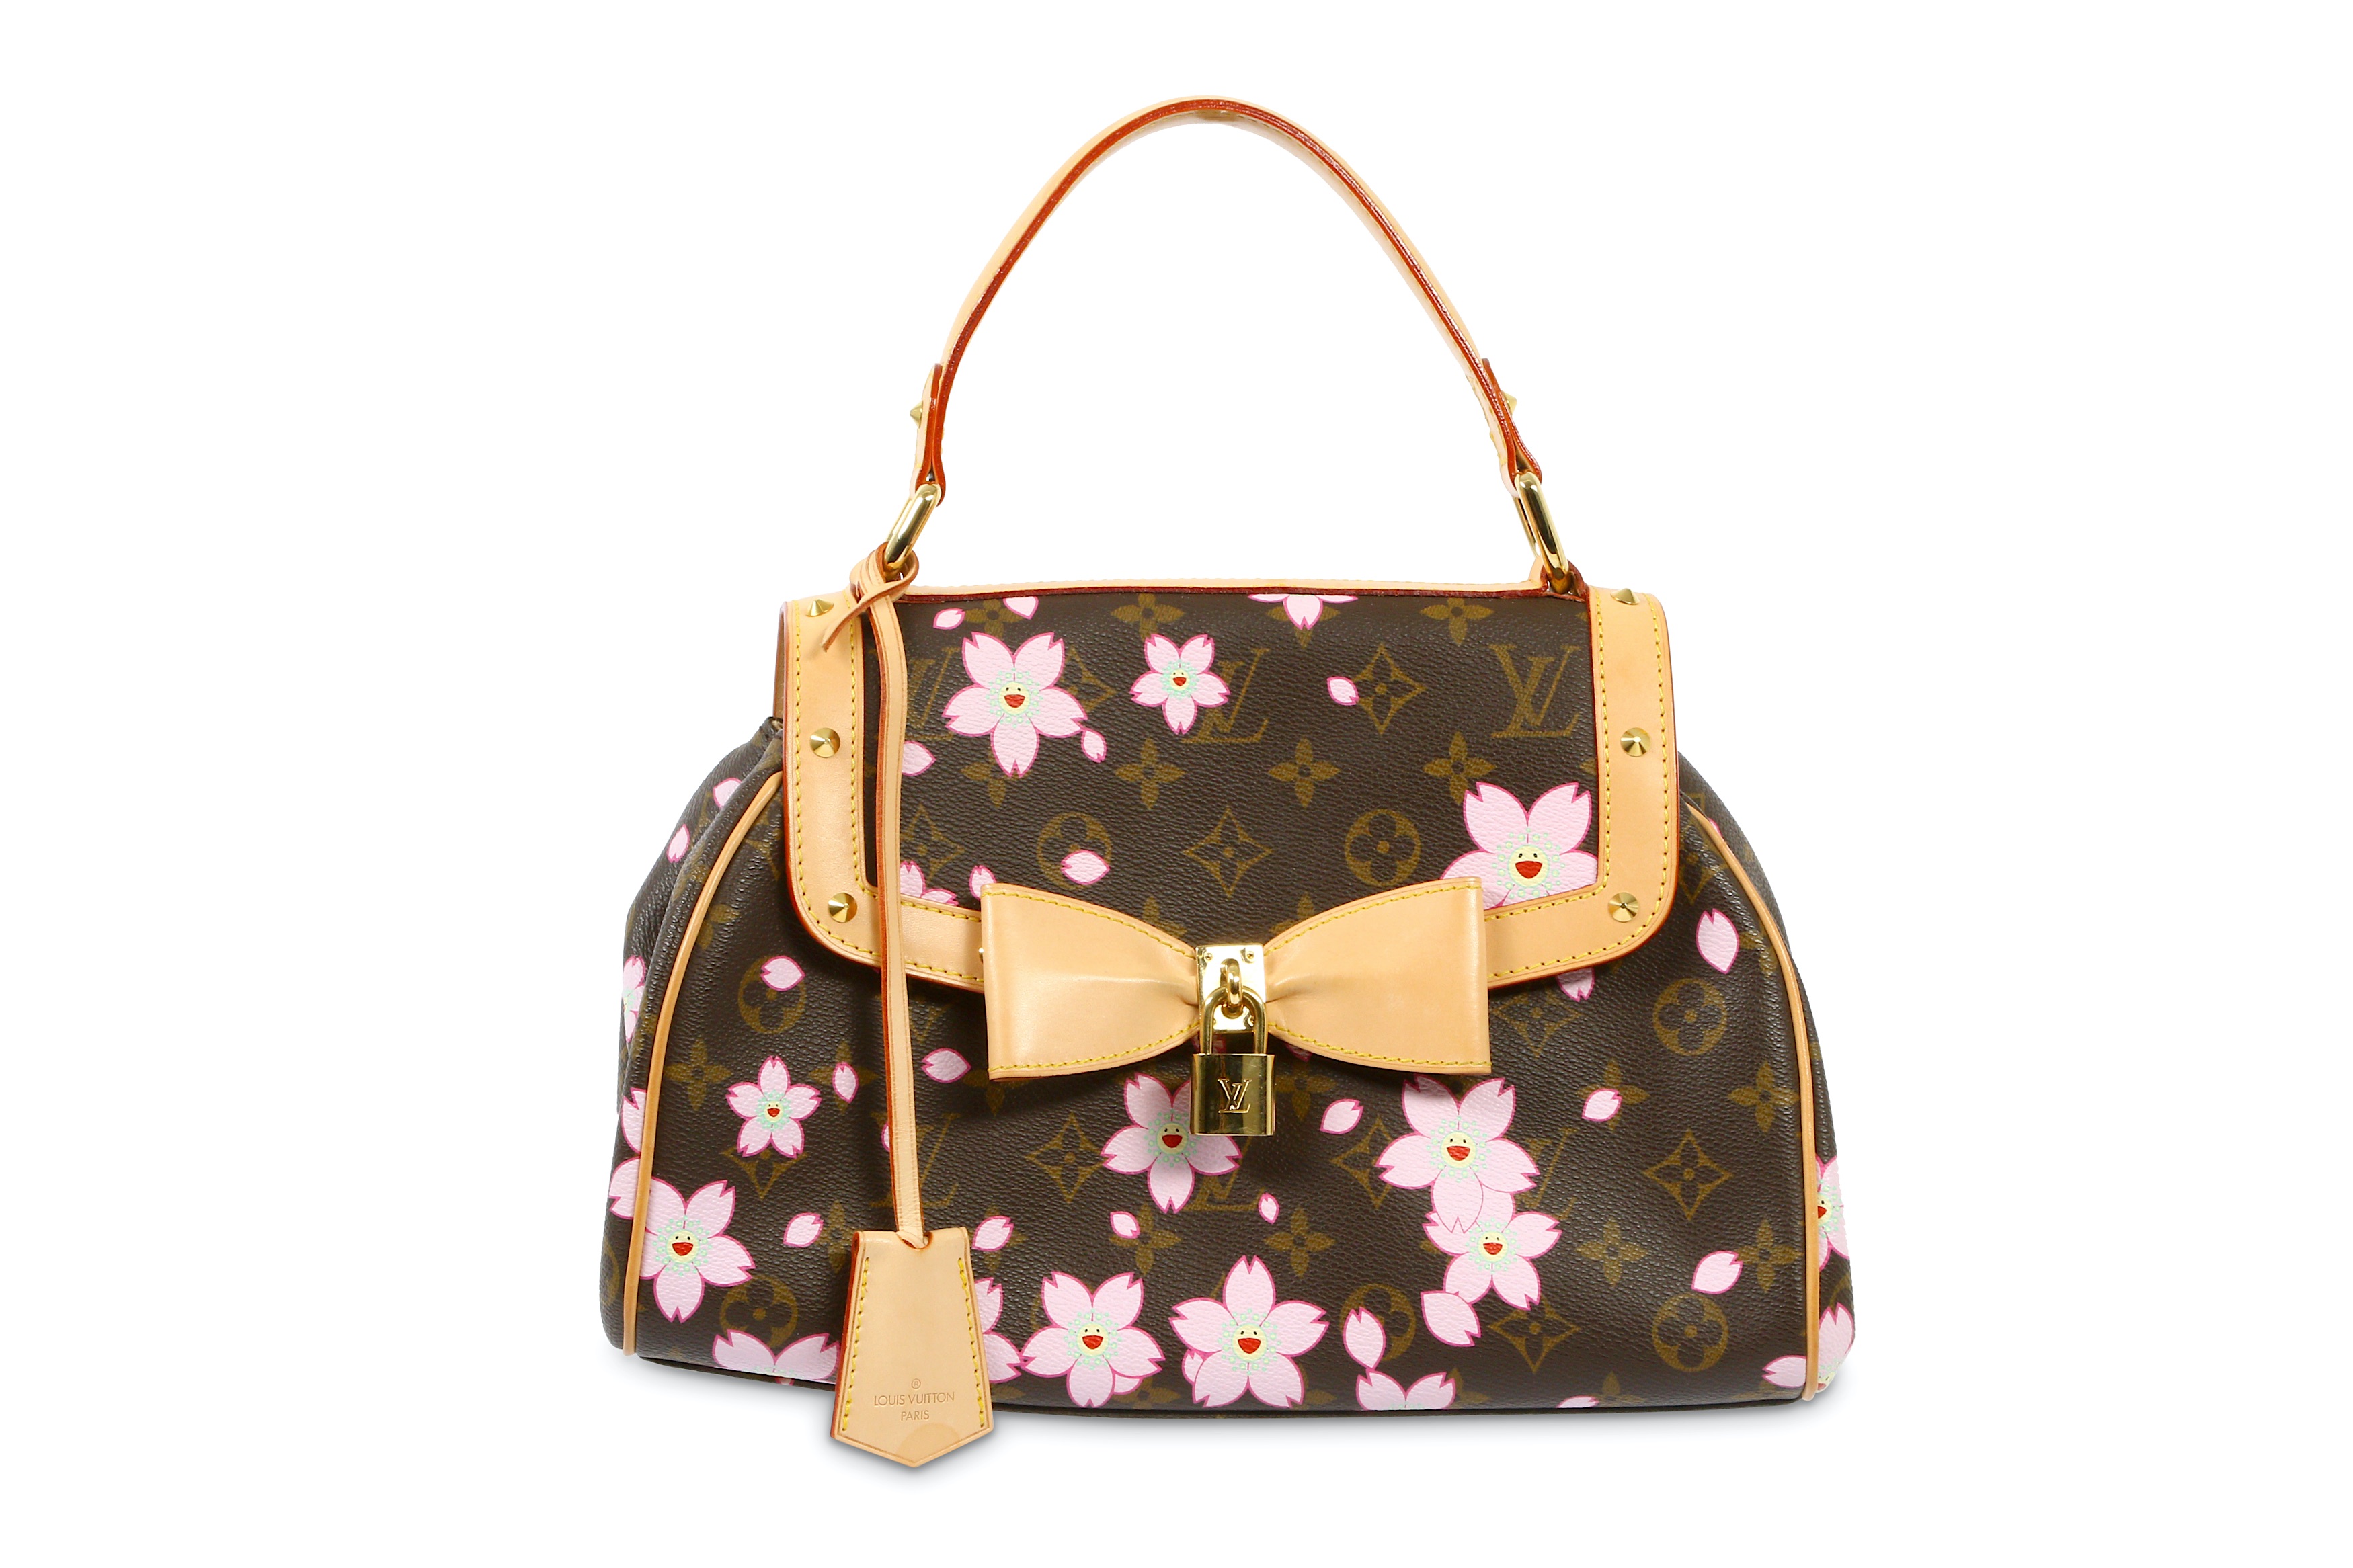 Authentic Louis Vuitton Limited Edition Murakani Cherry Blossom Sac Retro  Bag